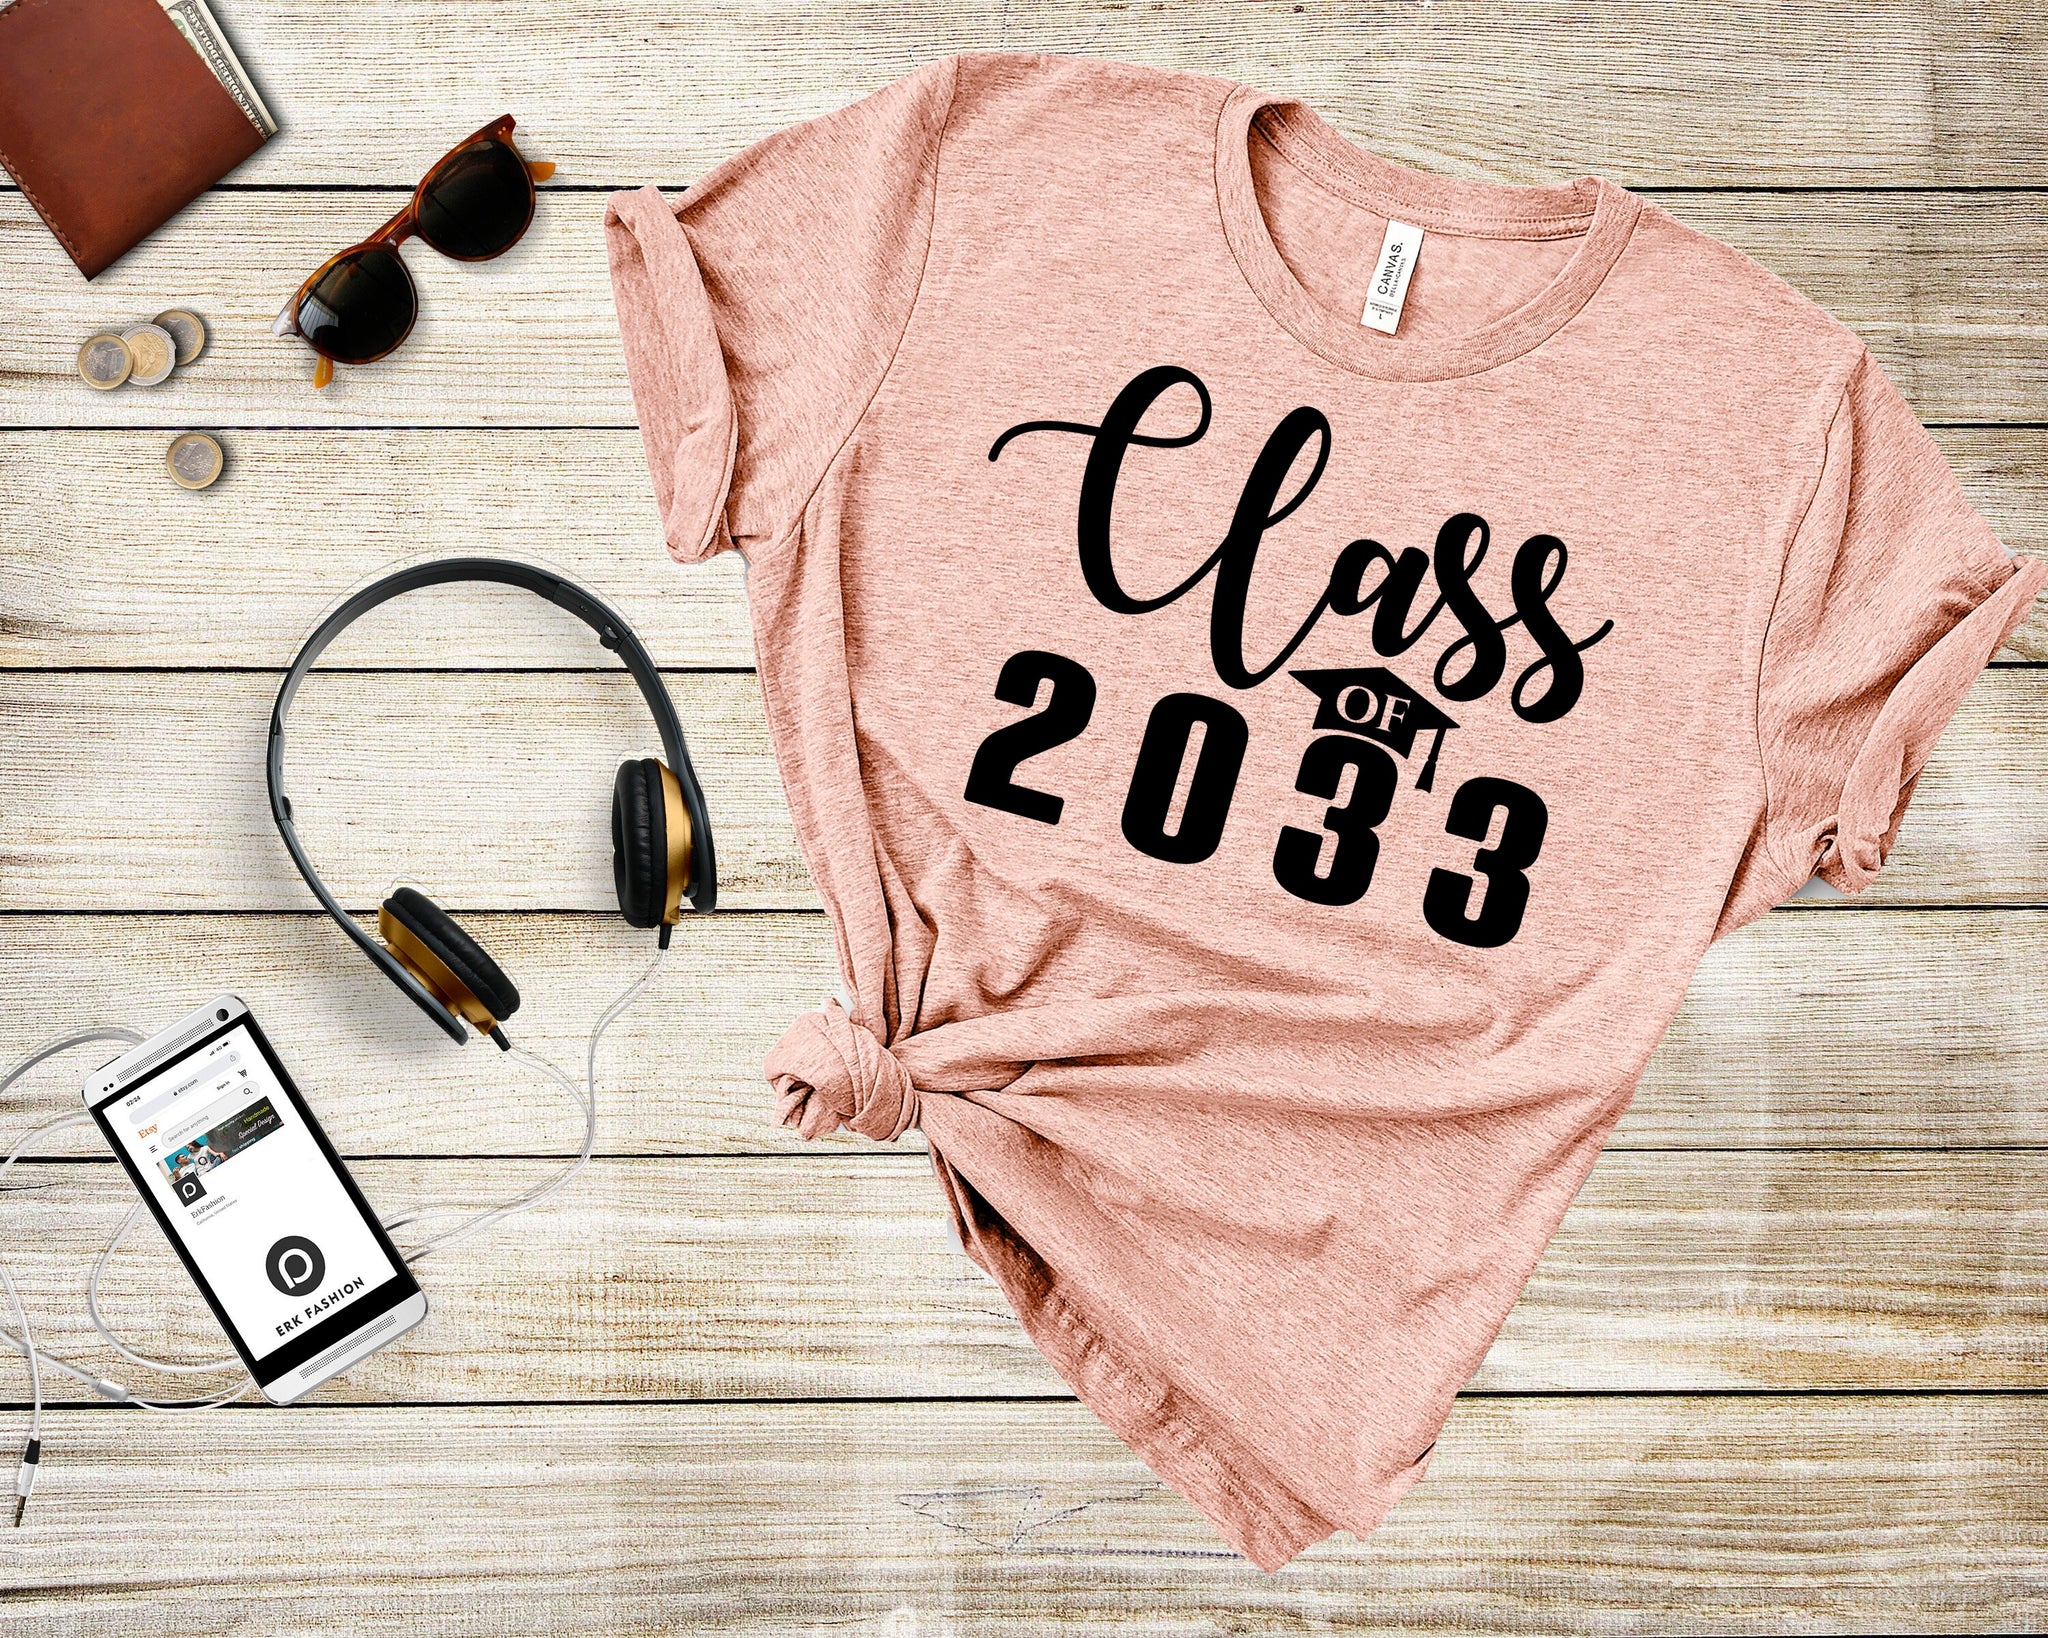 class of 2033, future class of 2033, class of 2021, class of 2033 shirt, Shirts gifts, unisex shirt, class of